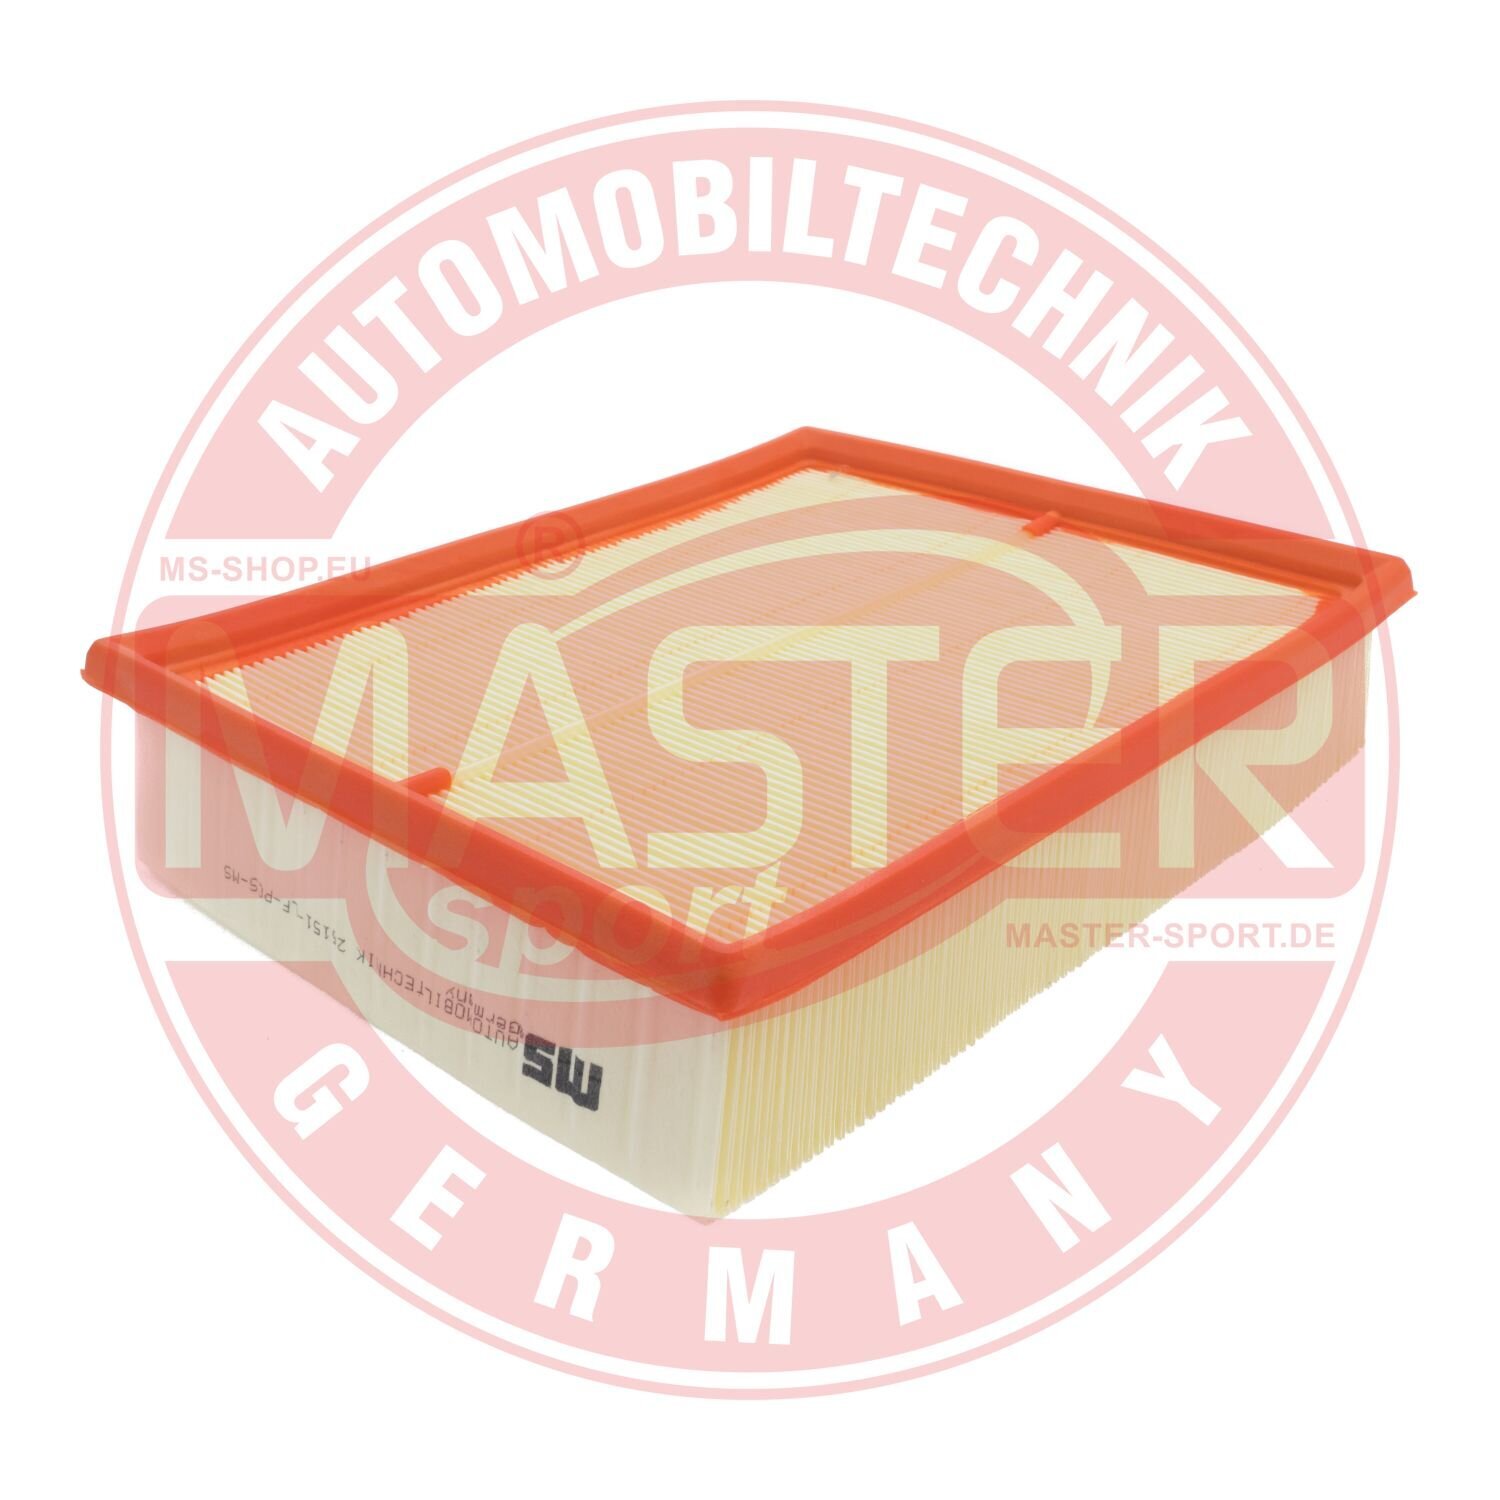 Luftfilter MASTER-SPORT GERMANY 26151-LF-PCS-MS